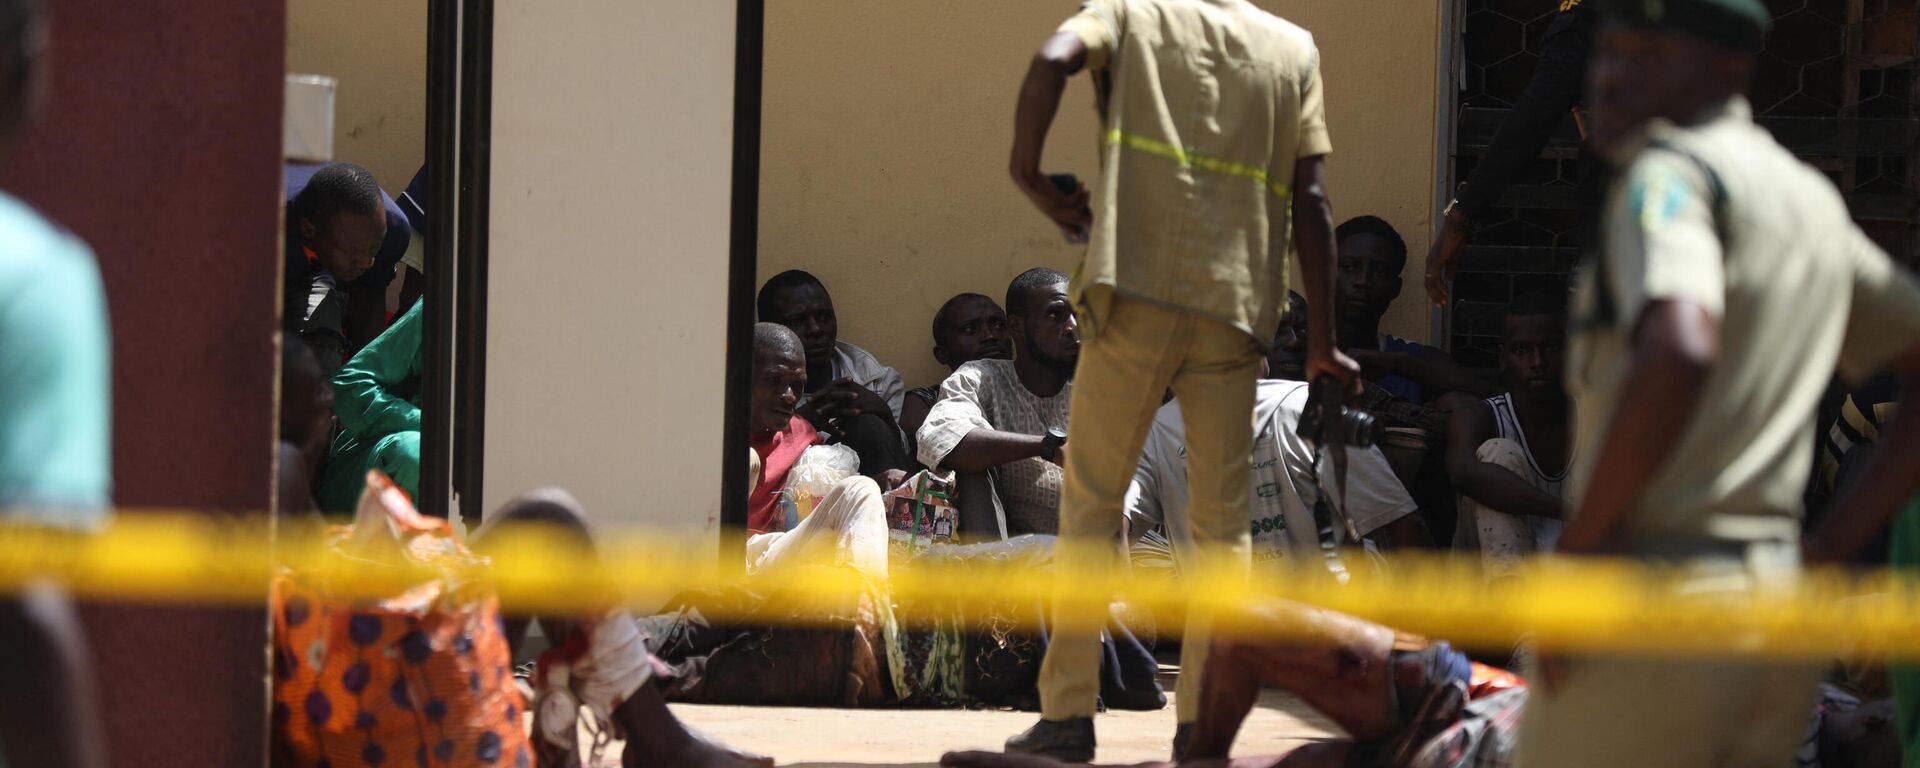 Recaptured inmates are seen inside the Kuje Medium Prison in Abuja, Nigeria on July 6, 2022, after suspected Boko Haram gunmen attacked the Kuje Medium Prison. - Sputnik International, 1920, 04.12.2022